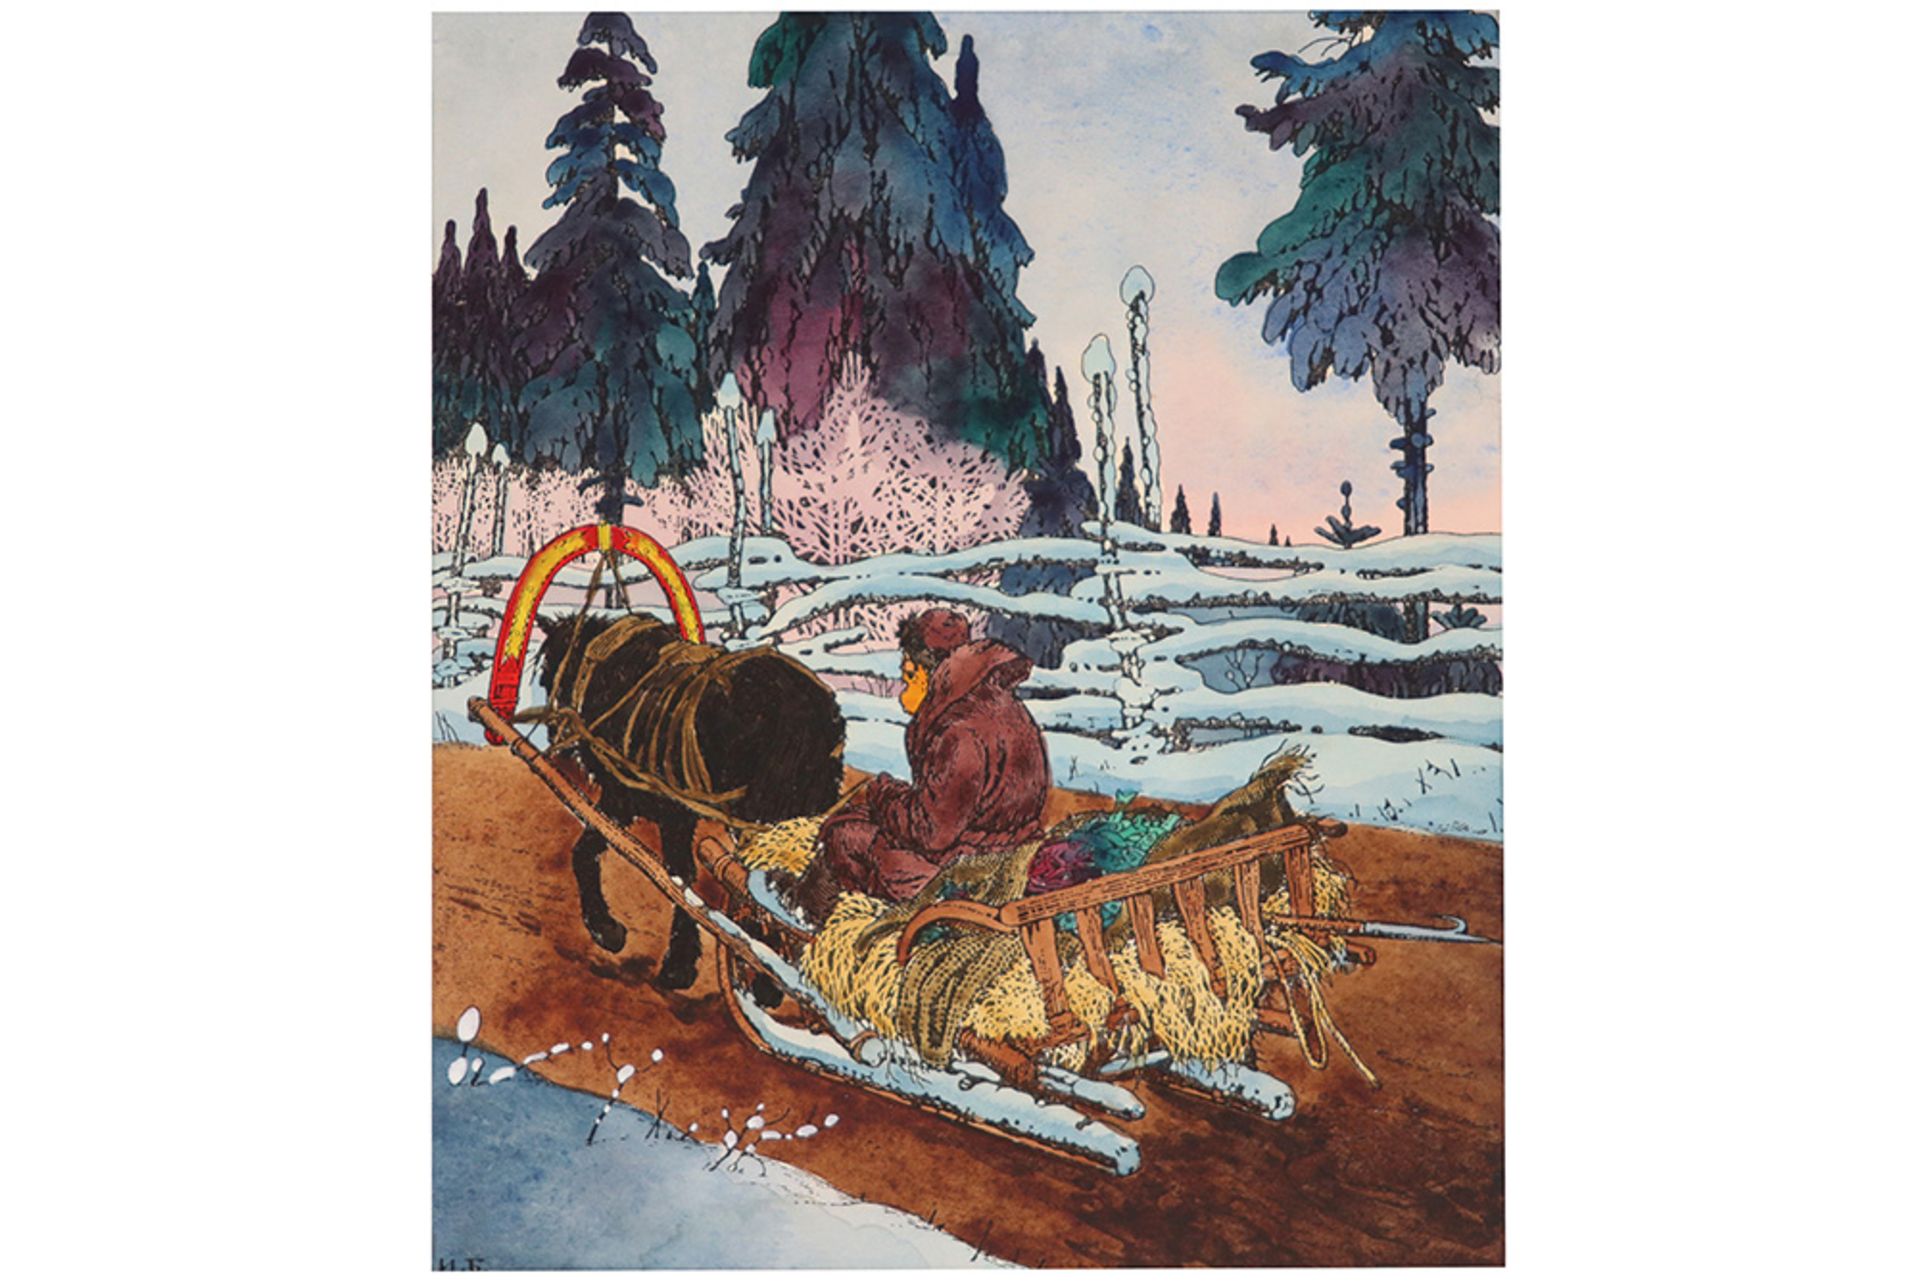 Ivan I. Bilibin "Fisherman on a sleigh" mixed media (gouache and aquarelle) - with his monogram ||